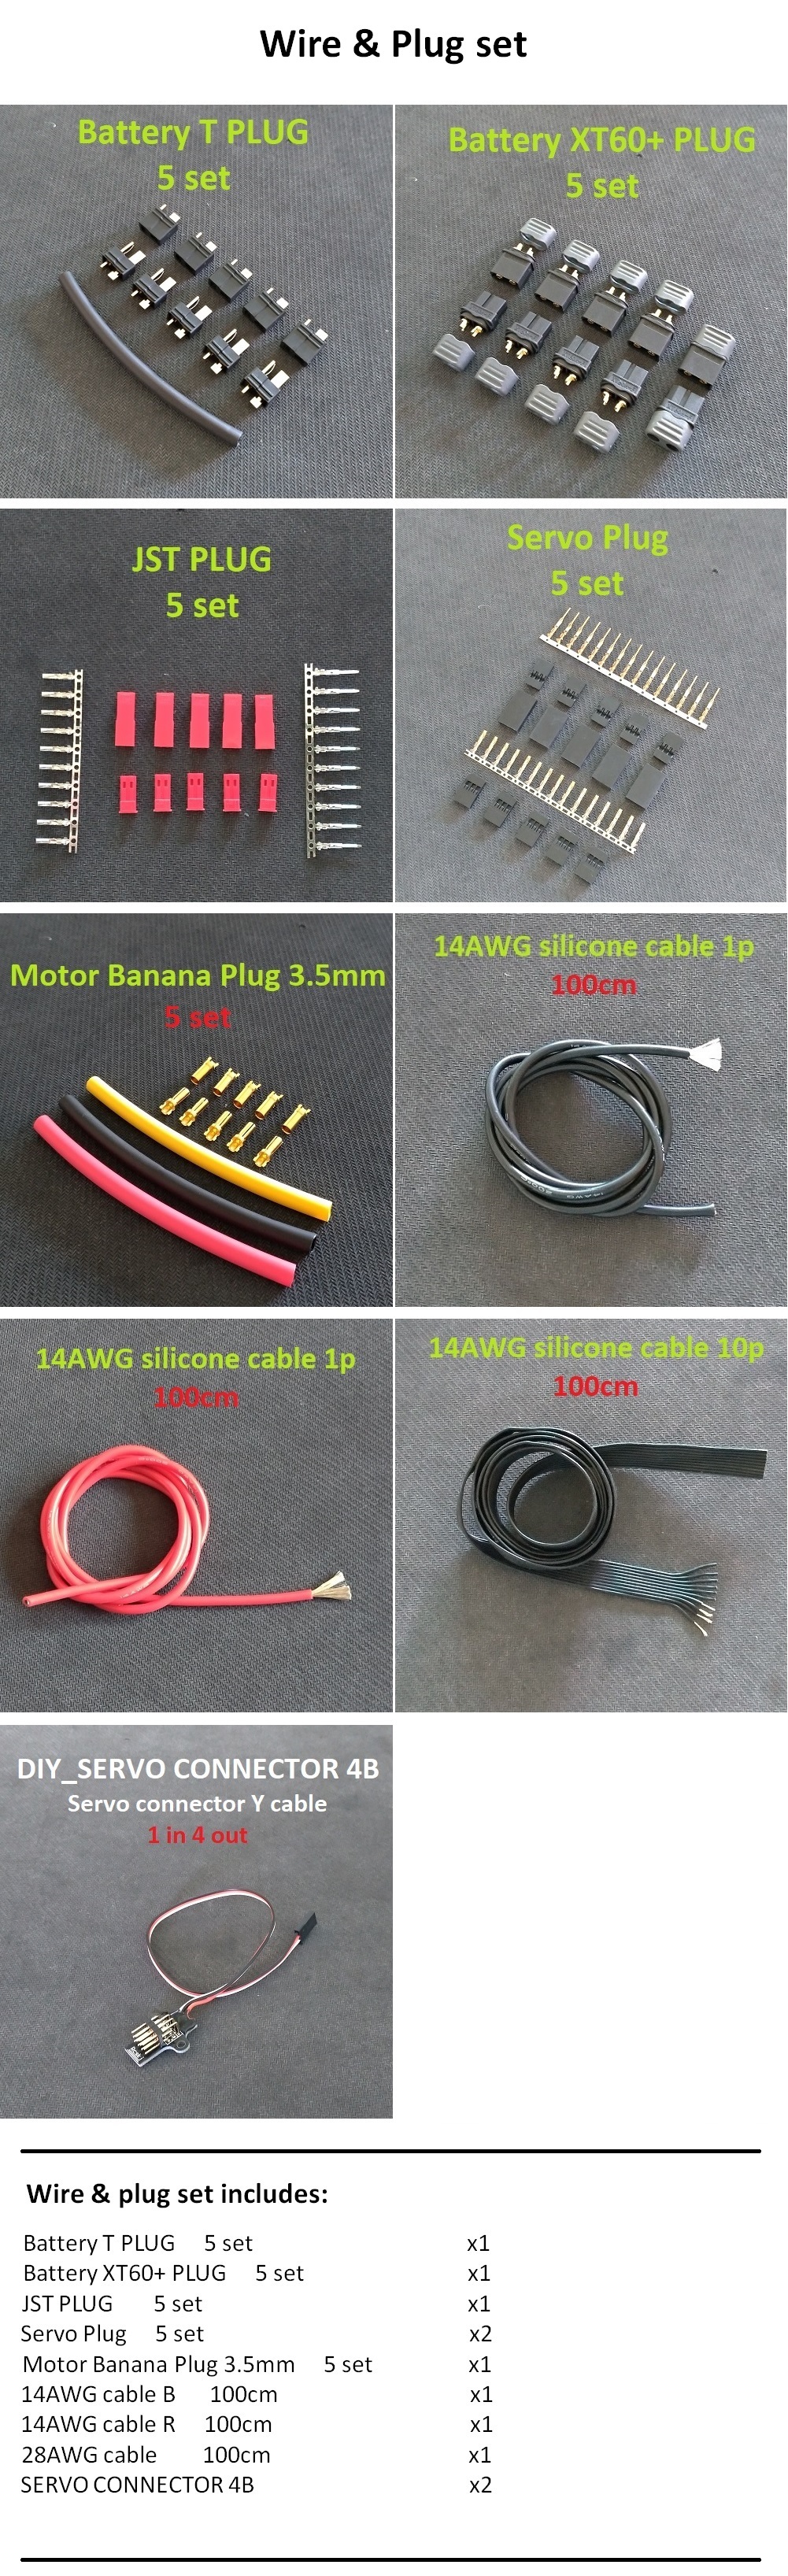 Wire & Plug set_01.jpg